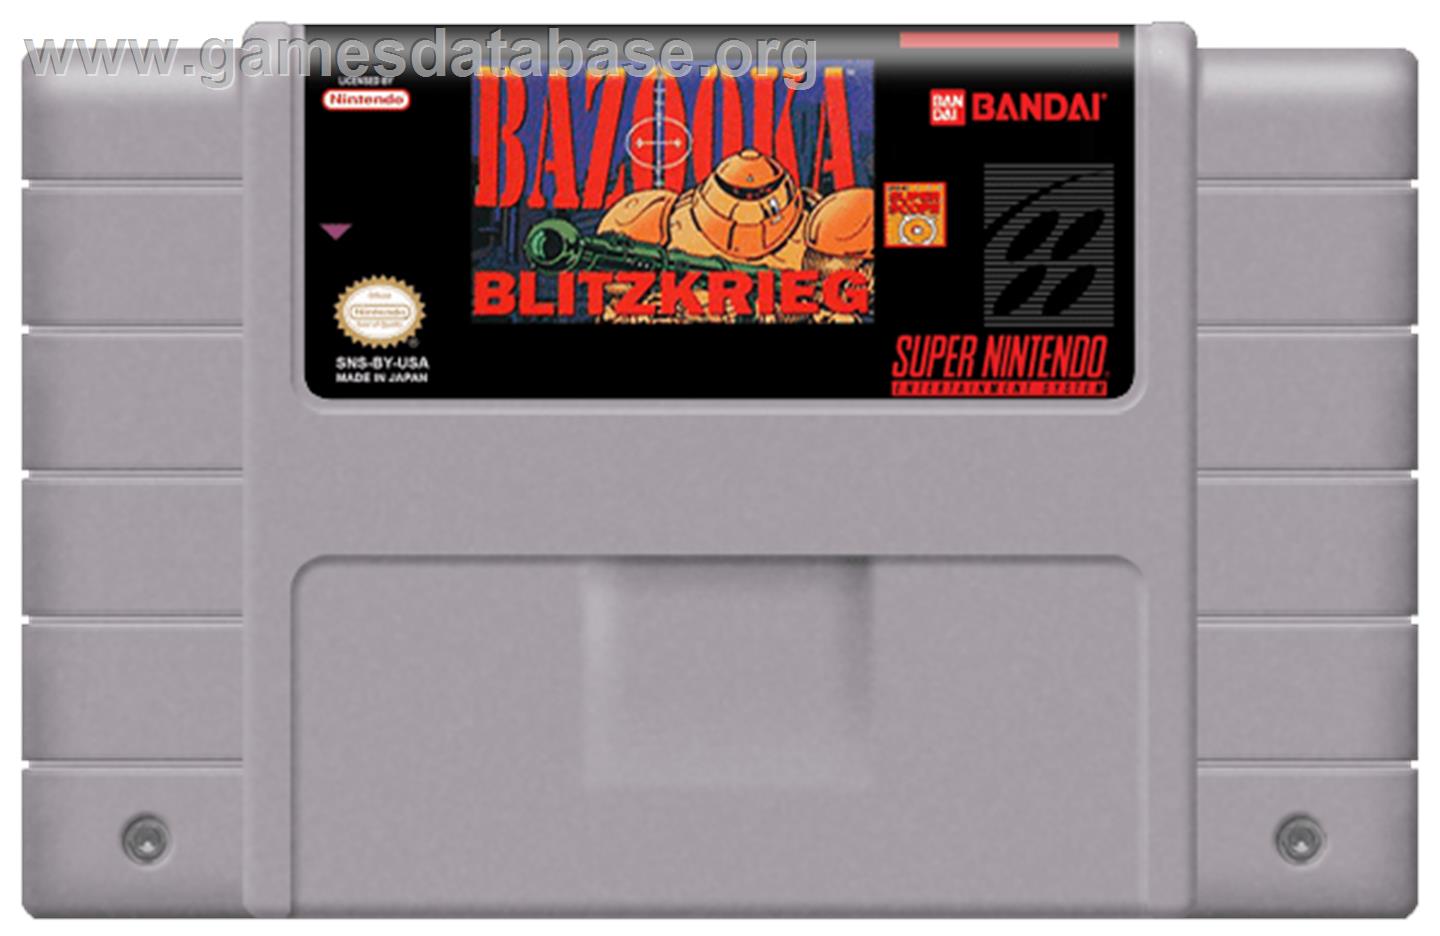 Bazooka Blitzkrieg - Nintendo SNES - Artwork - Cartridge